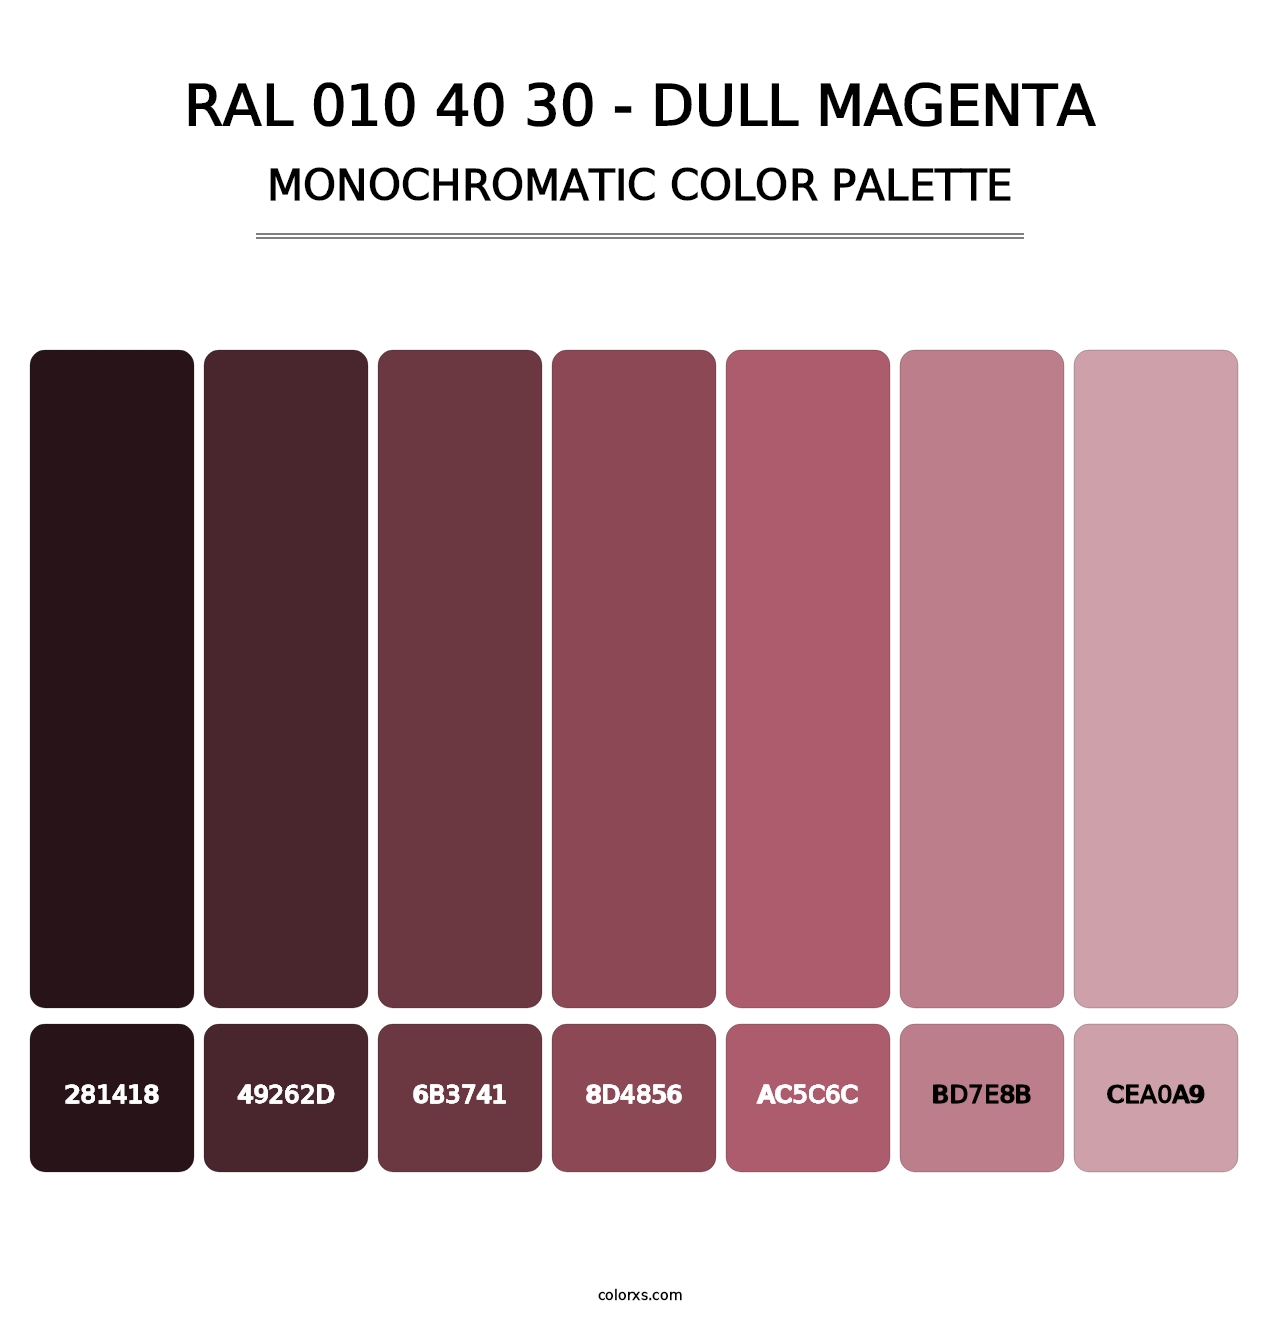 RAL 010 40 30 - Dull Magenta - Monochromatic Color Palette